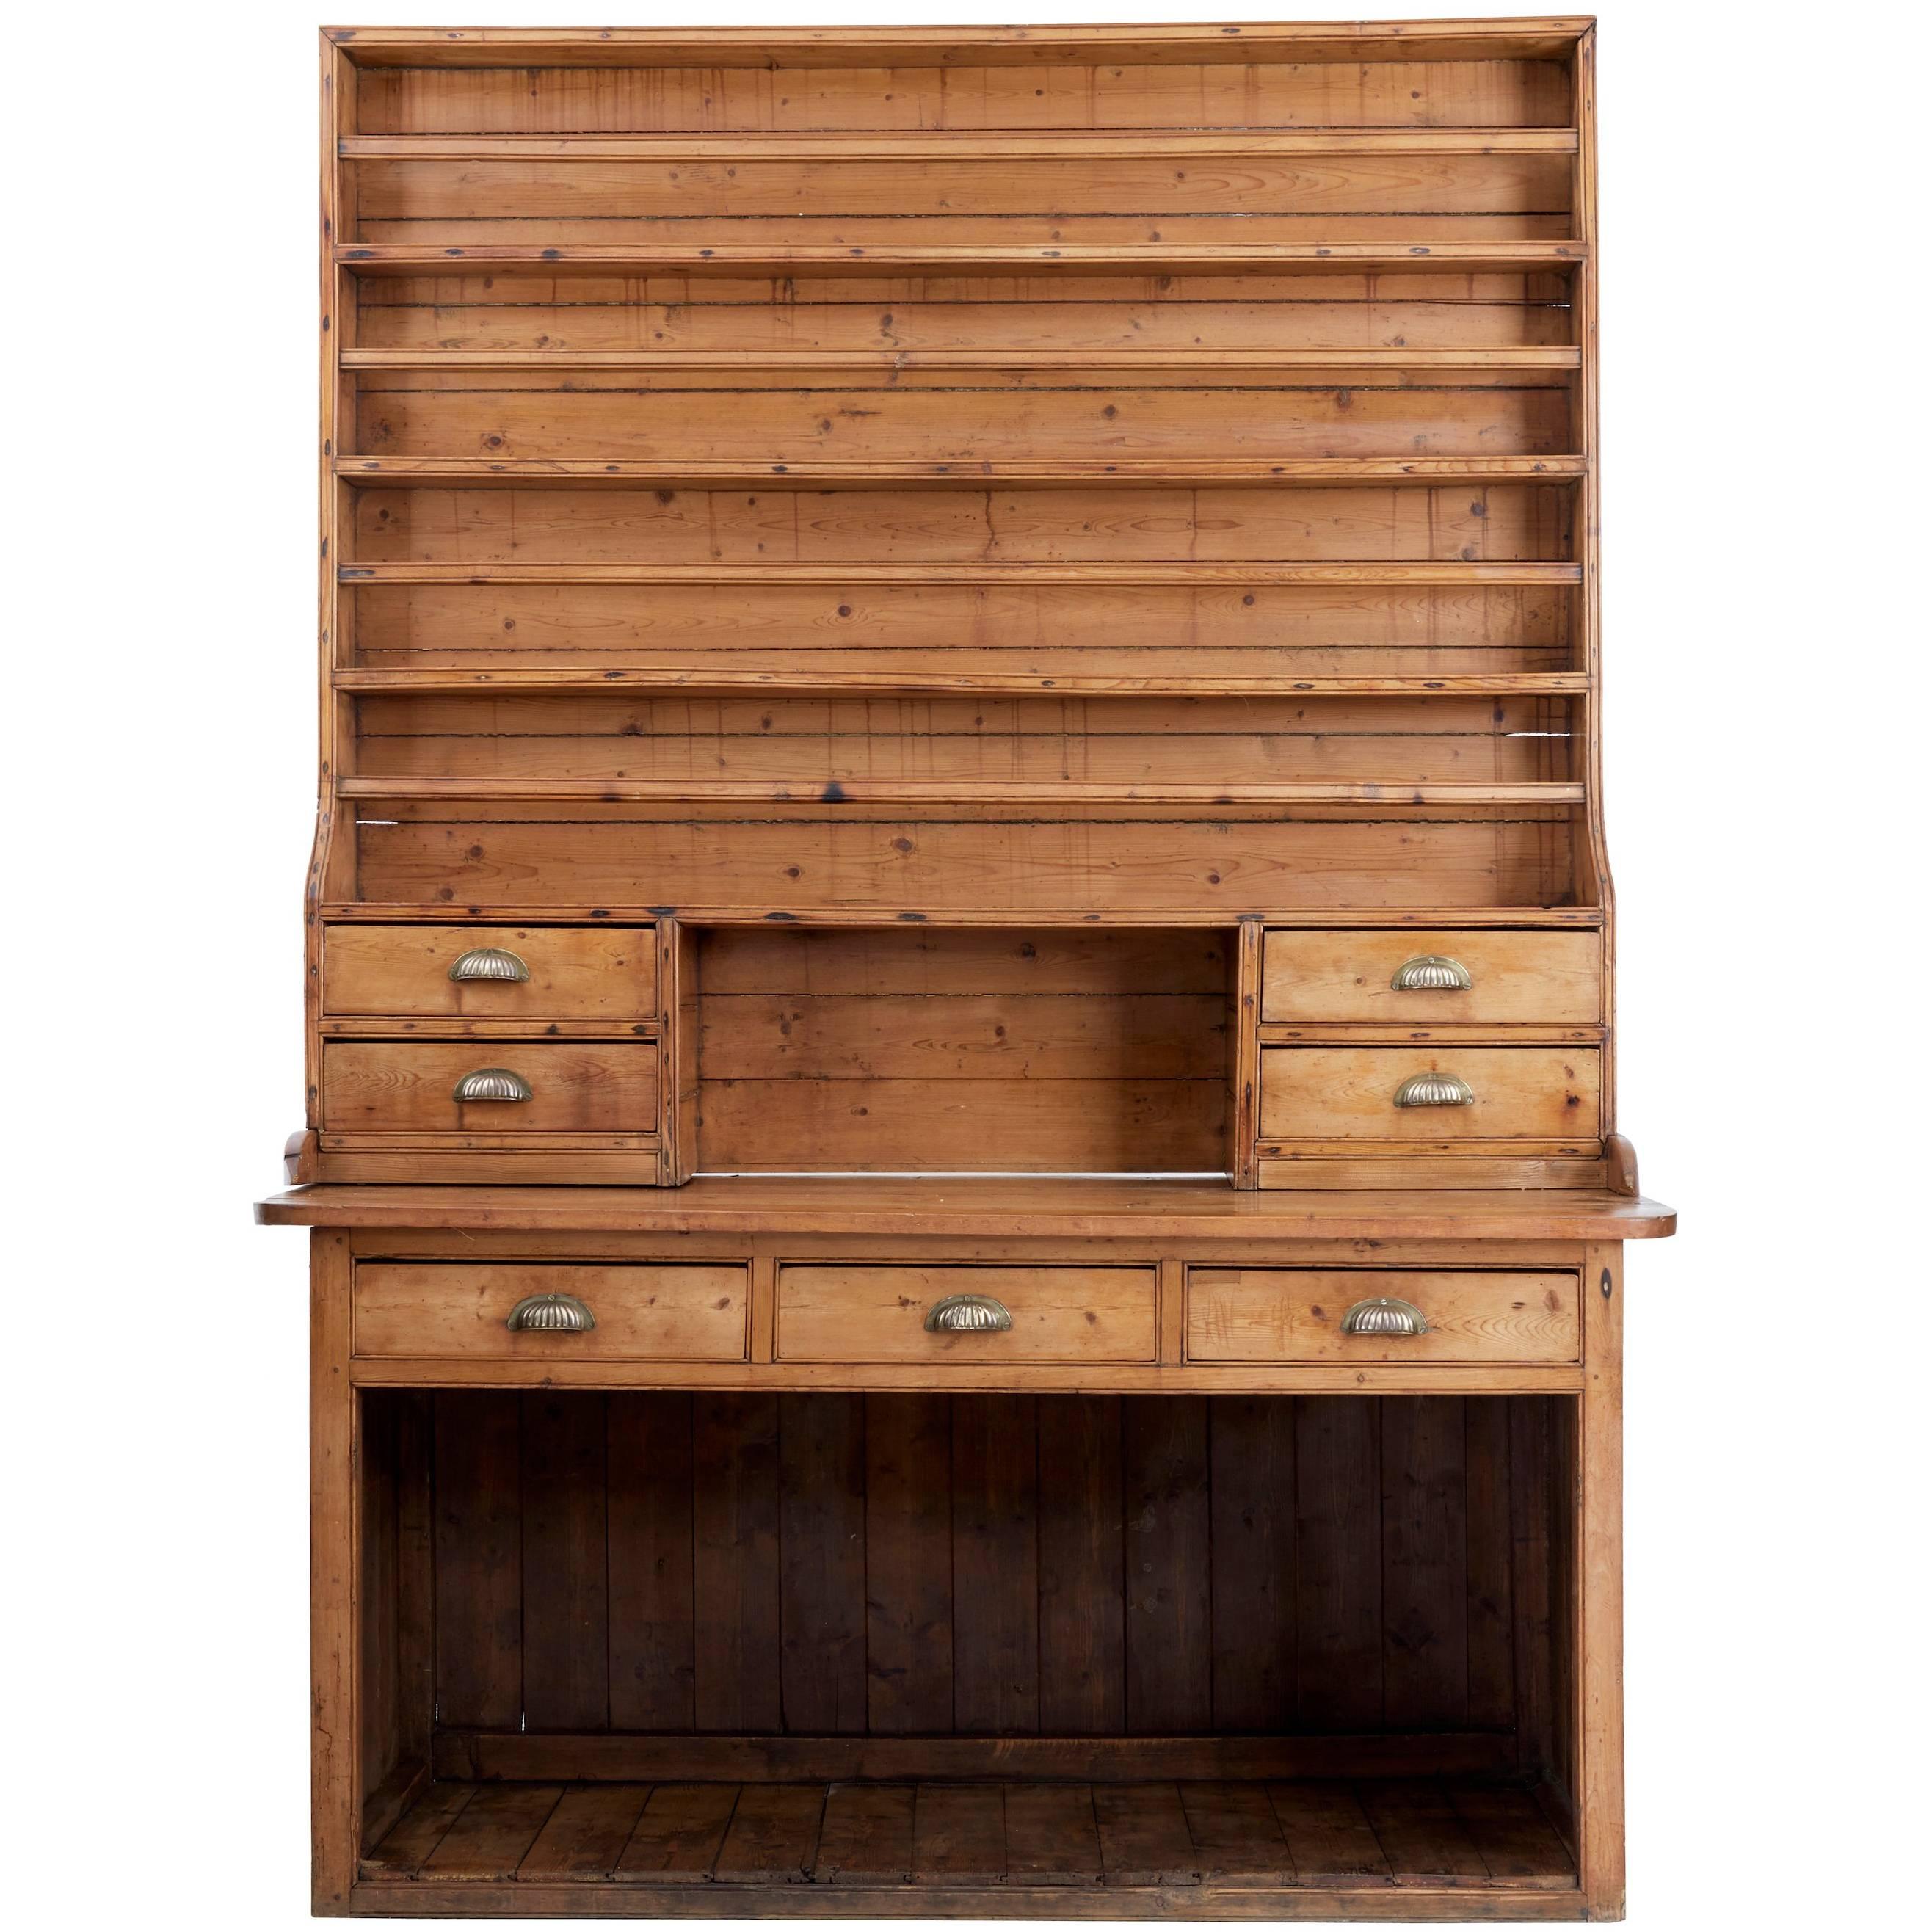 19th Century Rustic Victorian Pine Dresser and Rack